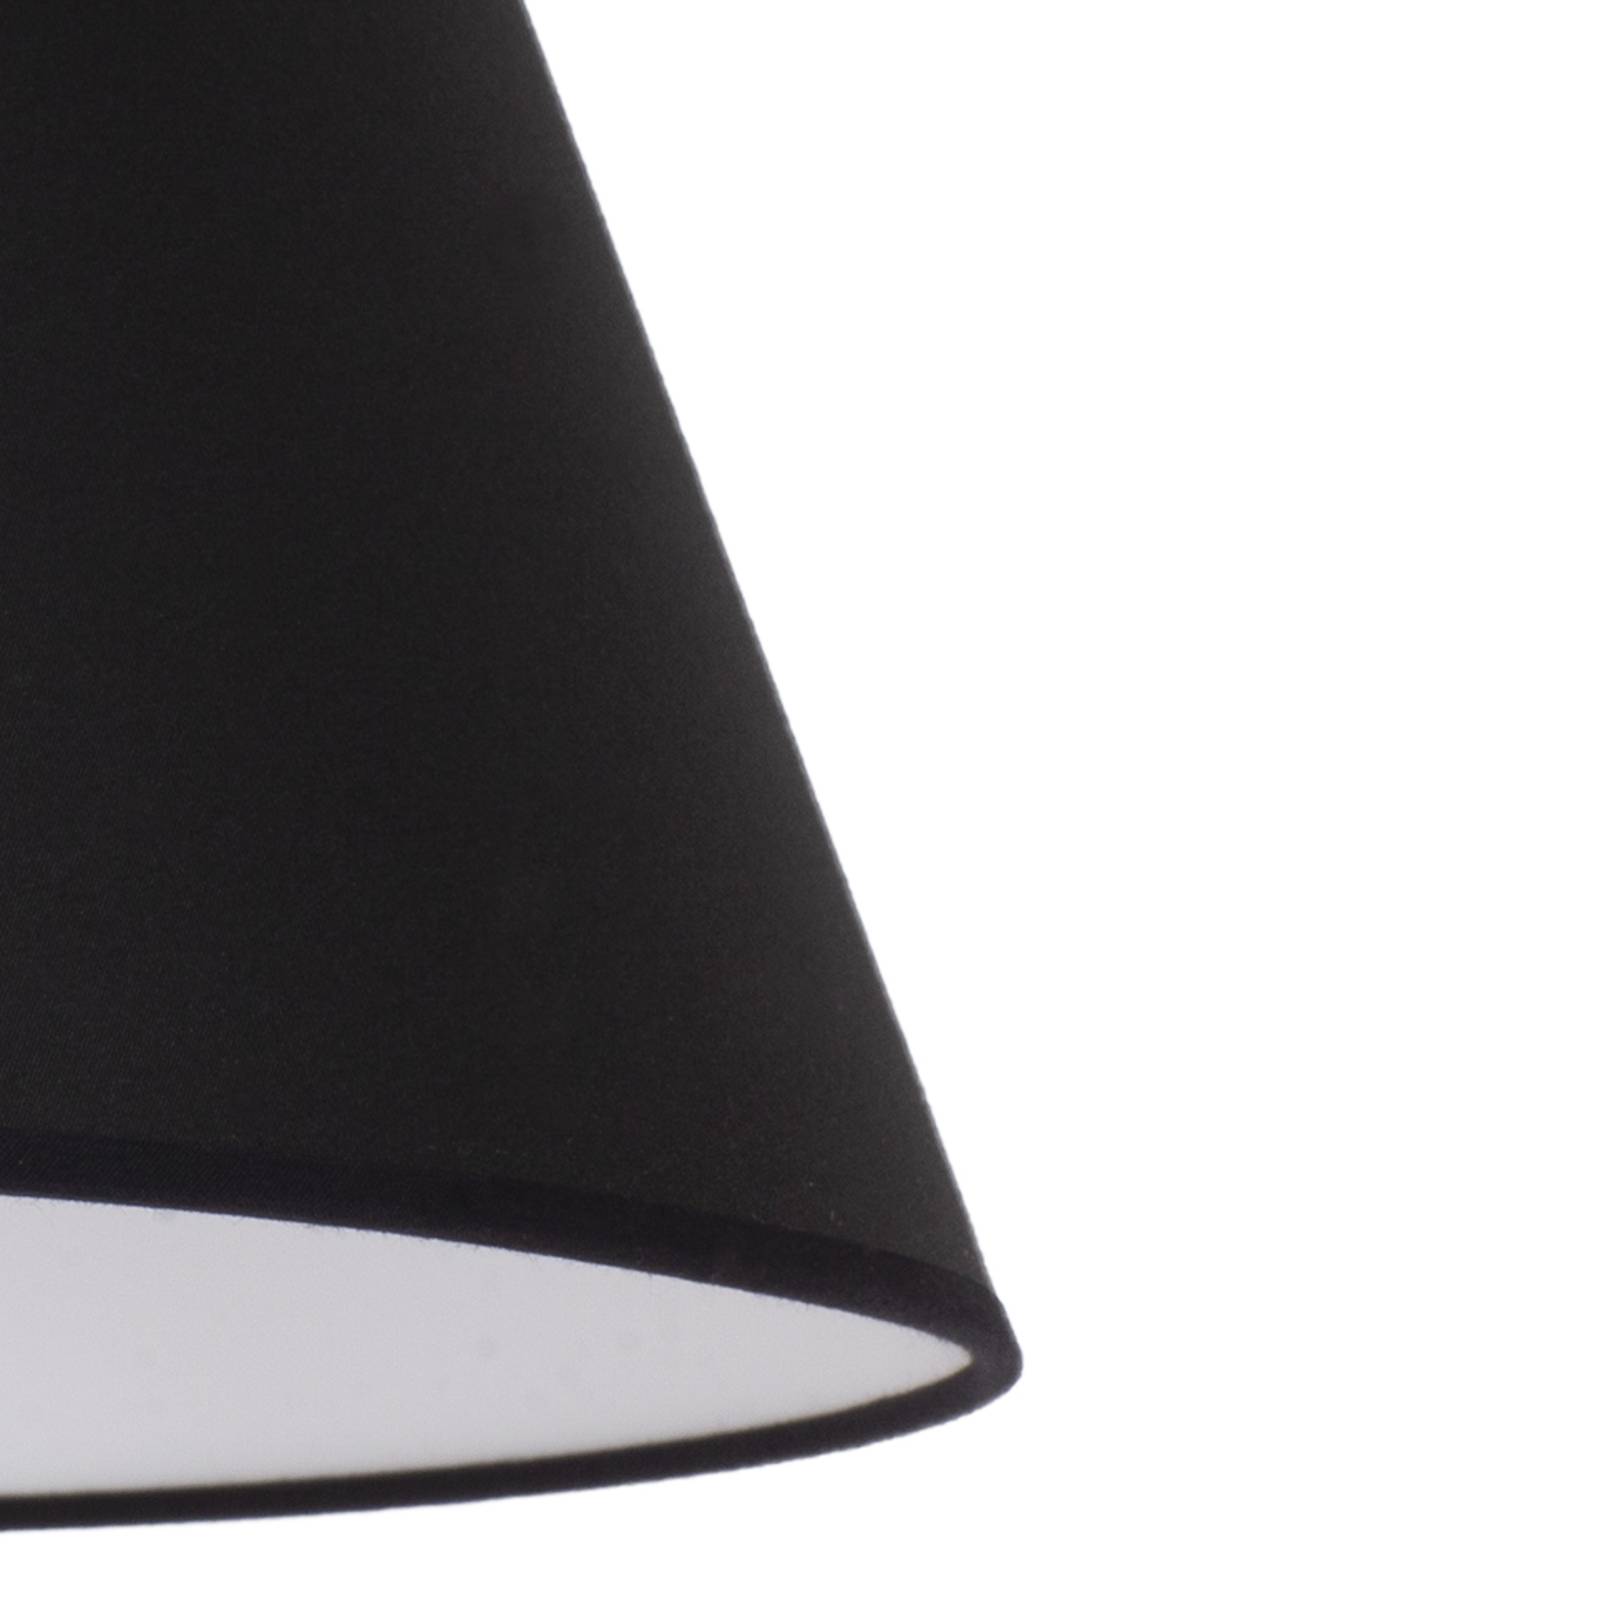 Sofia lámpaernyő 26 cm magas, fekete/fehér